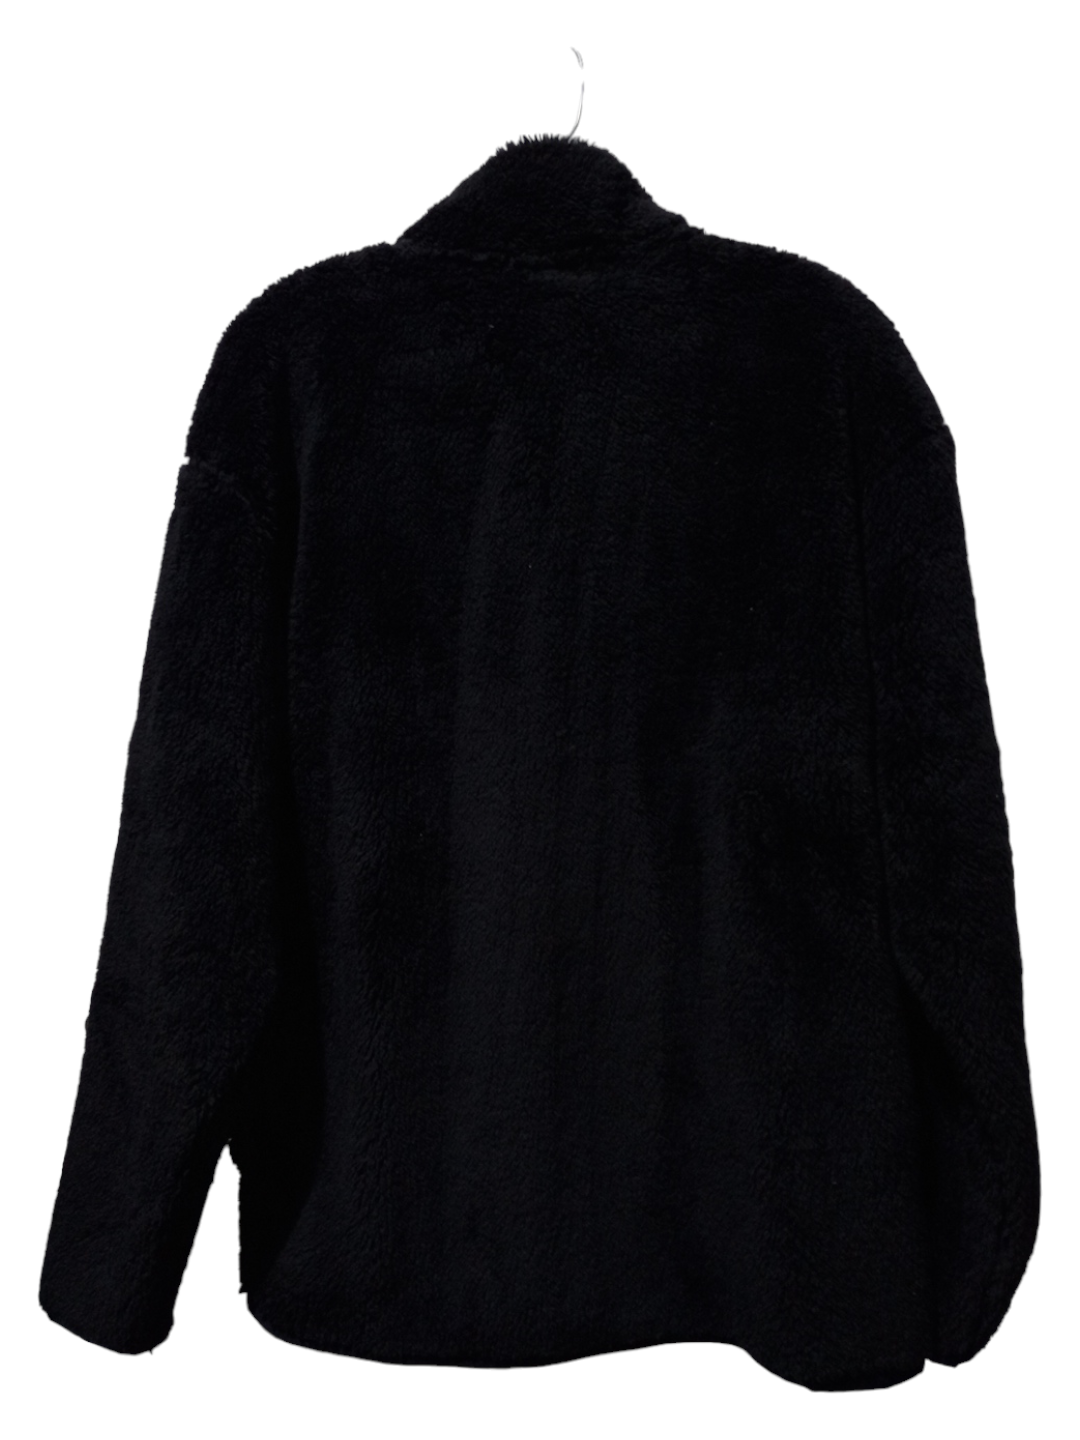 Black Sweatshirt Collar Victorias Secret, Size S